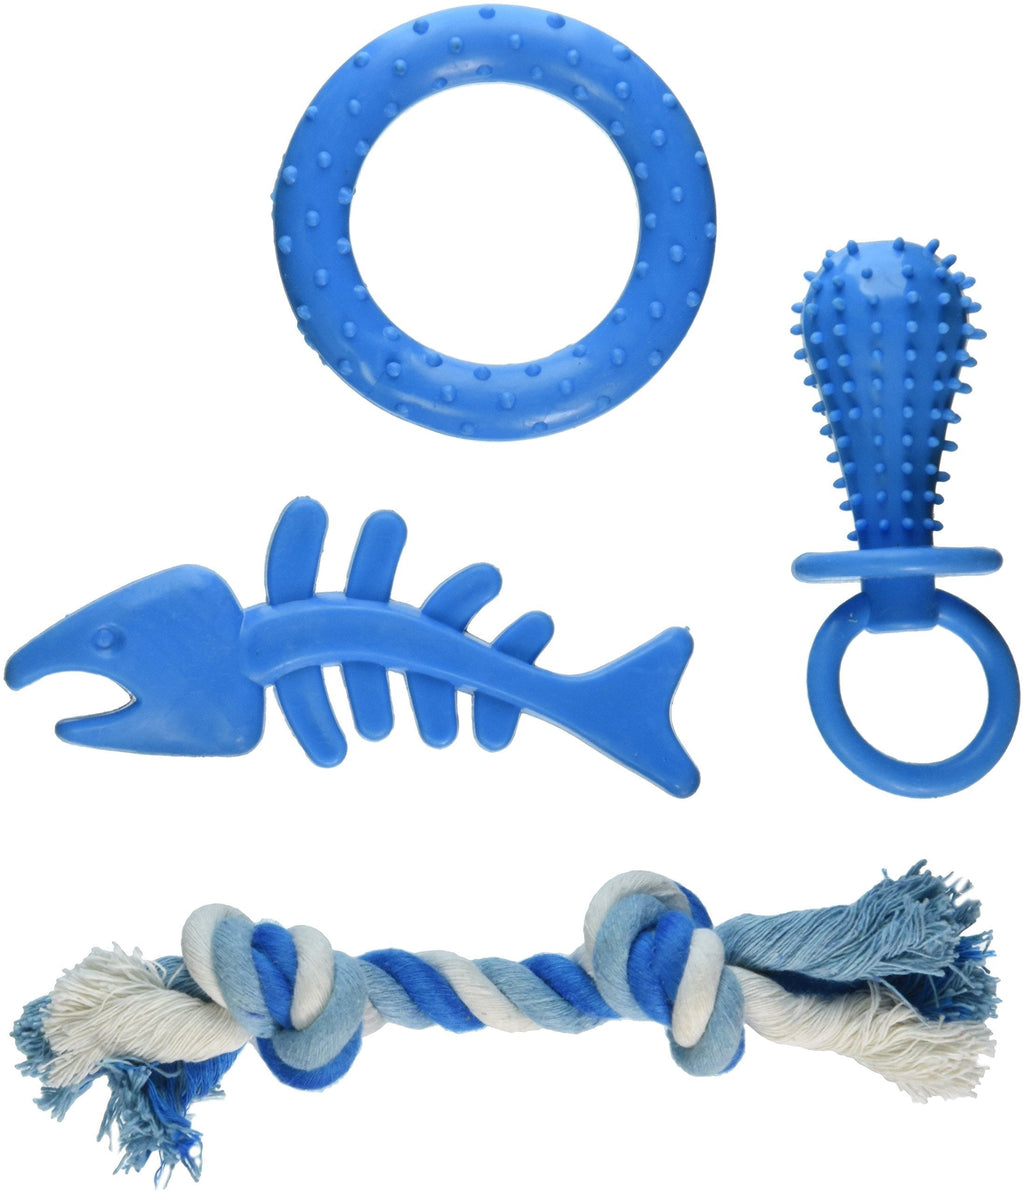 [Australia] - Kole KI-OF653 Puppy Teeth-Cleaning Toy Set, One Size blue green 